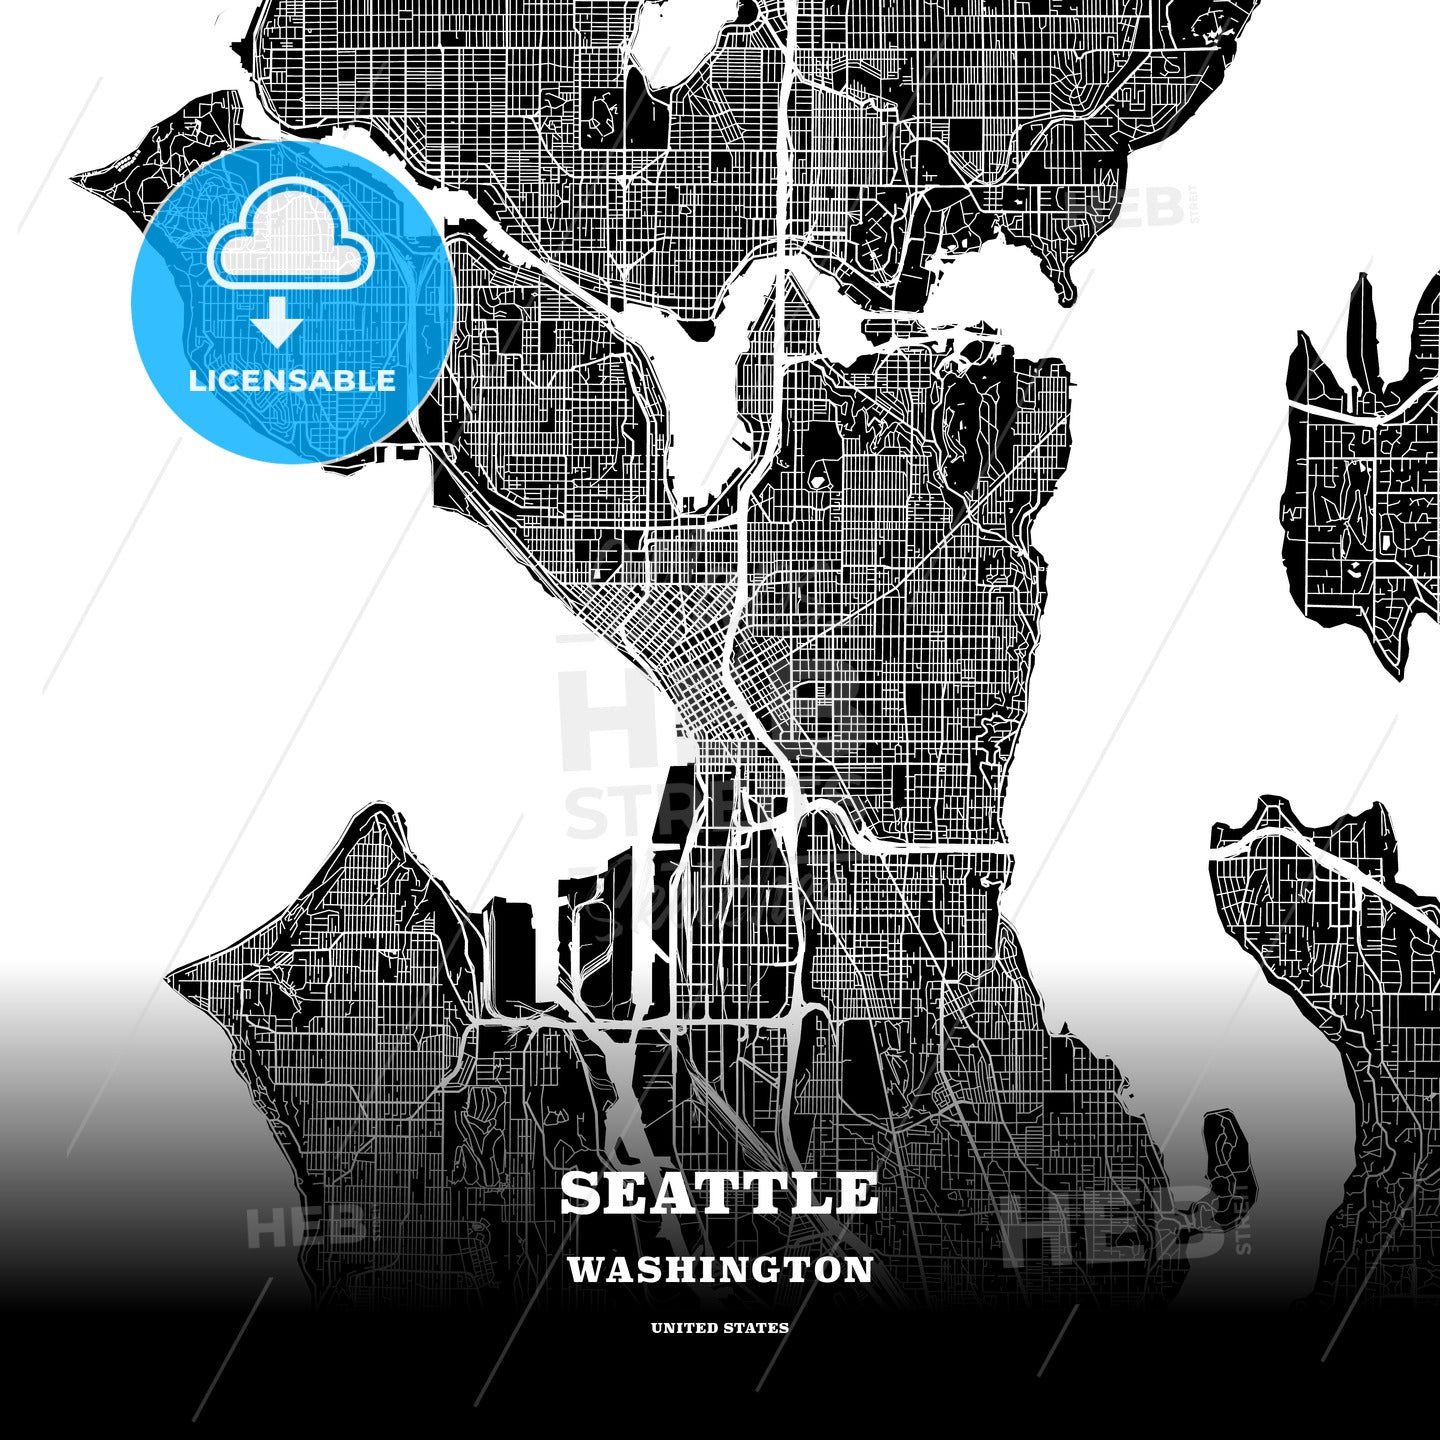 Seattle, Washington, USA map